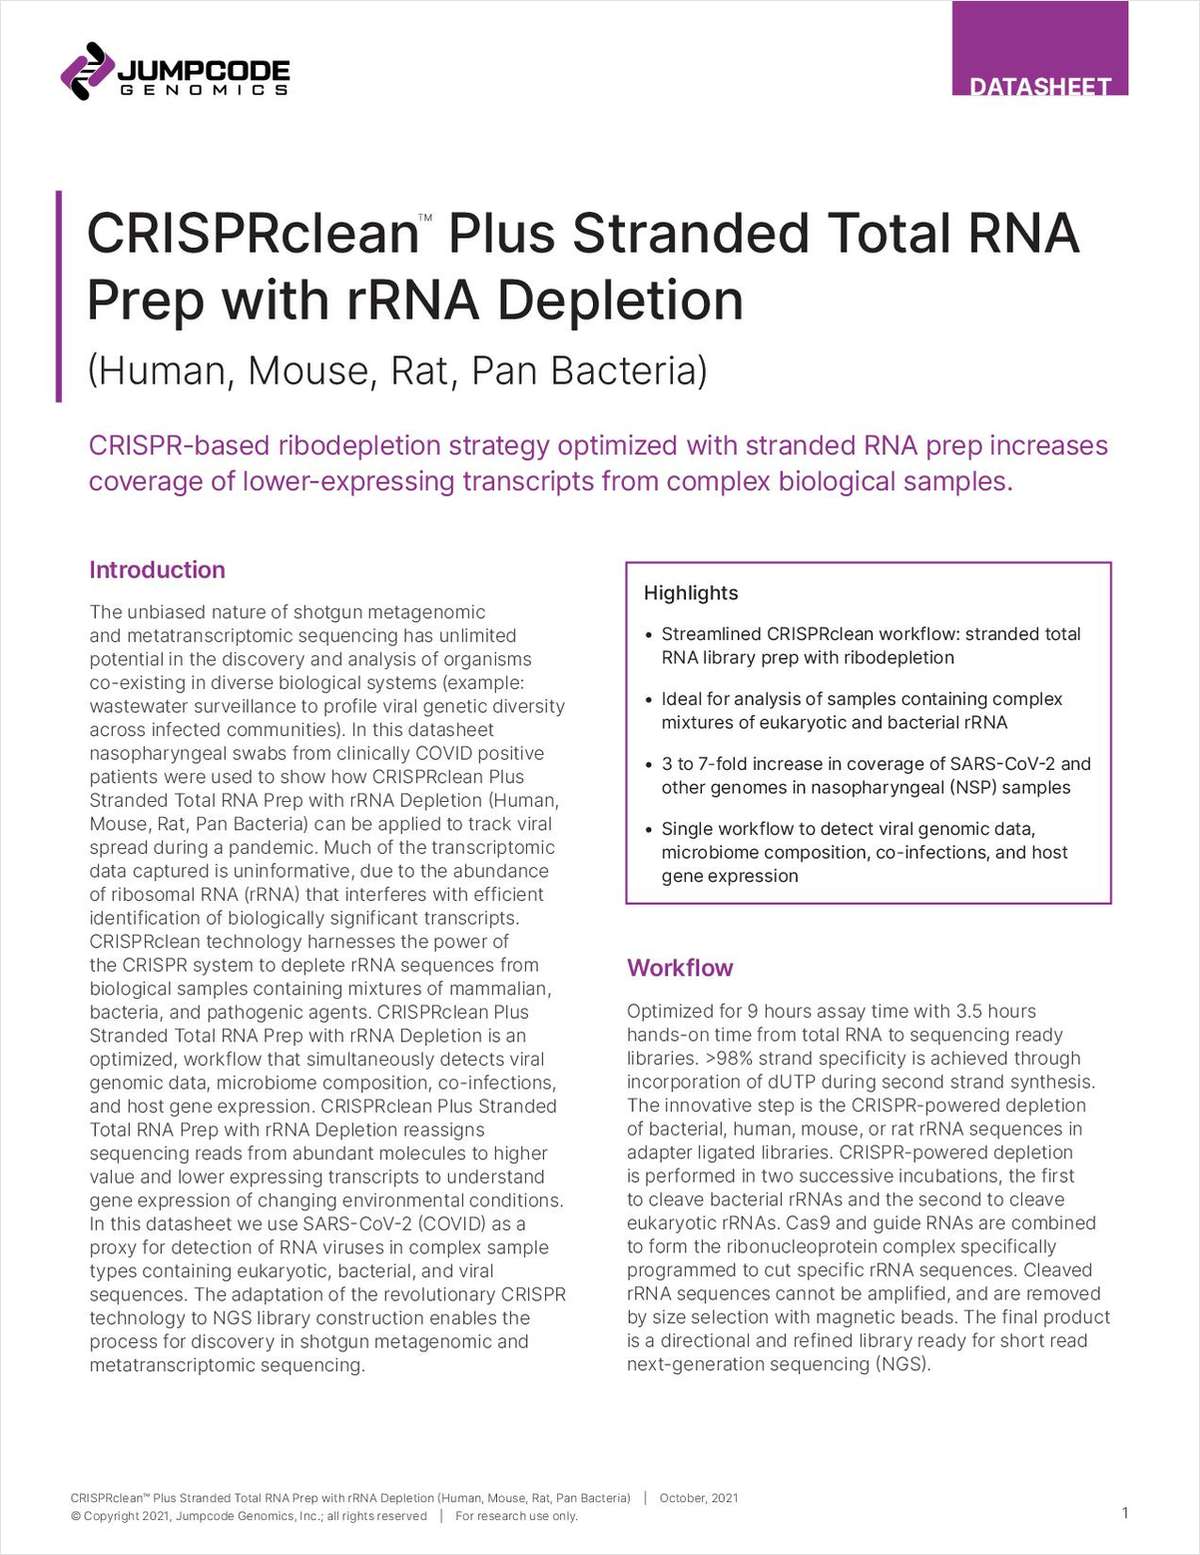 CRISPRclean Plus Stranded Total RNA Prep with rRNA Depletion